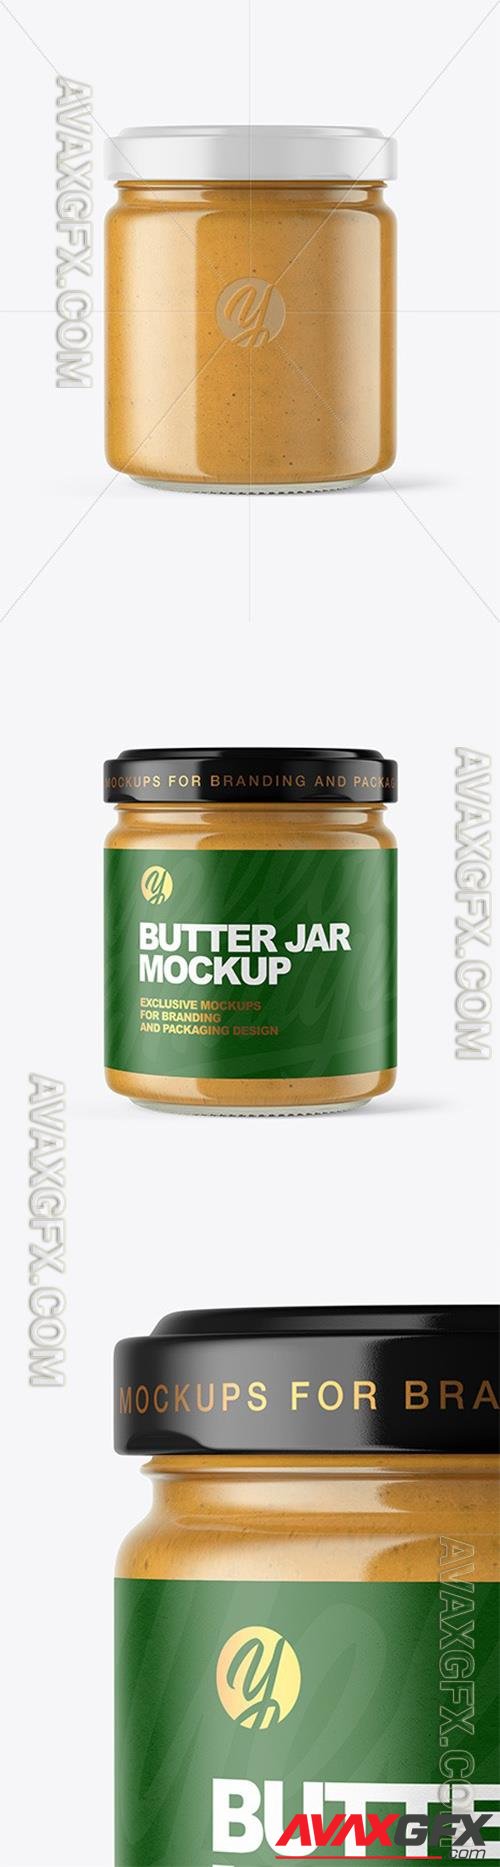 Clear Glass Jar with Peanut Butter Mockup 51335 TIF